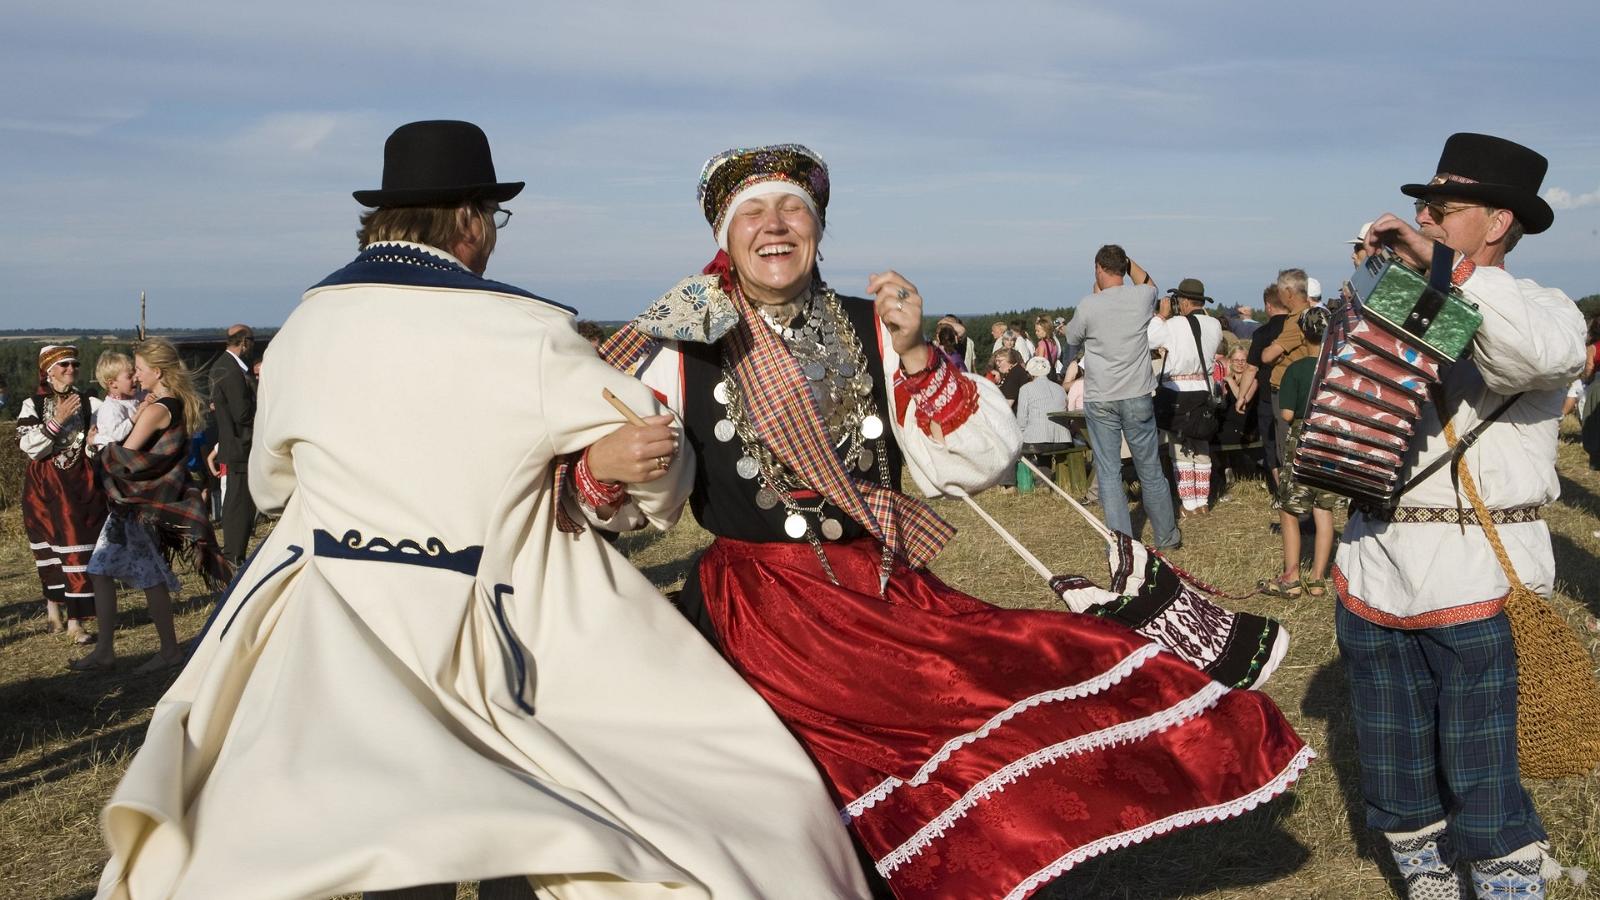 Dressing traditionally - folk costumes in Estonia | Visit Estonia